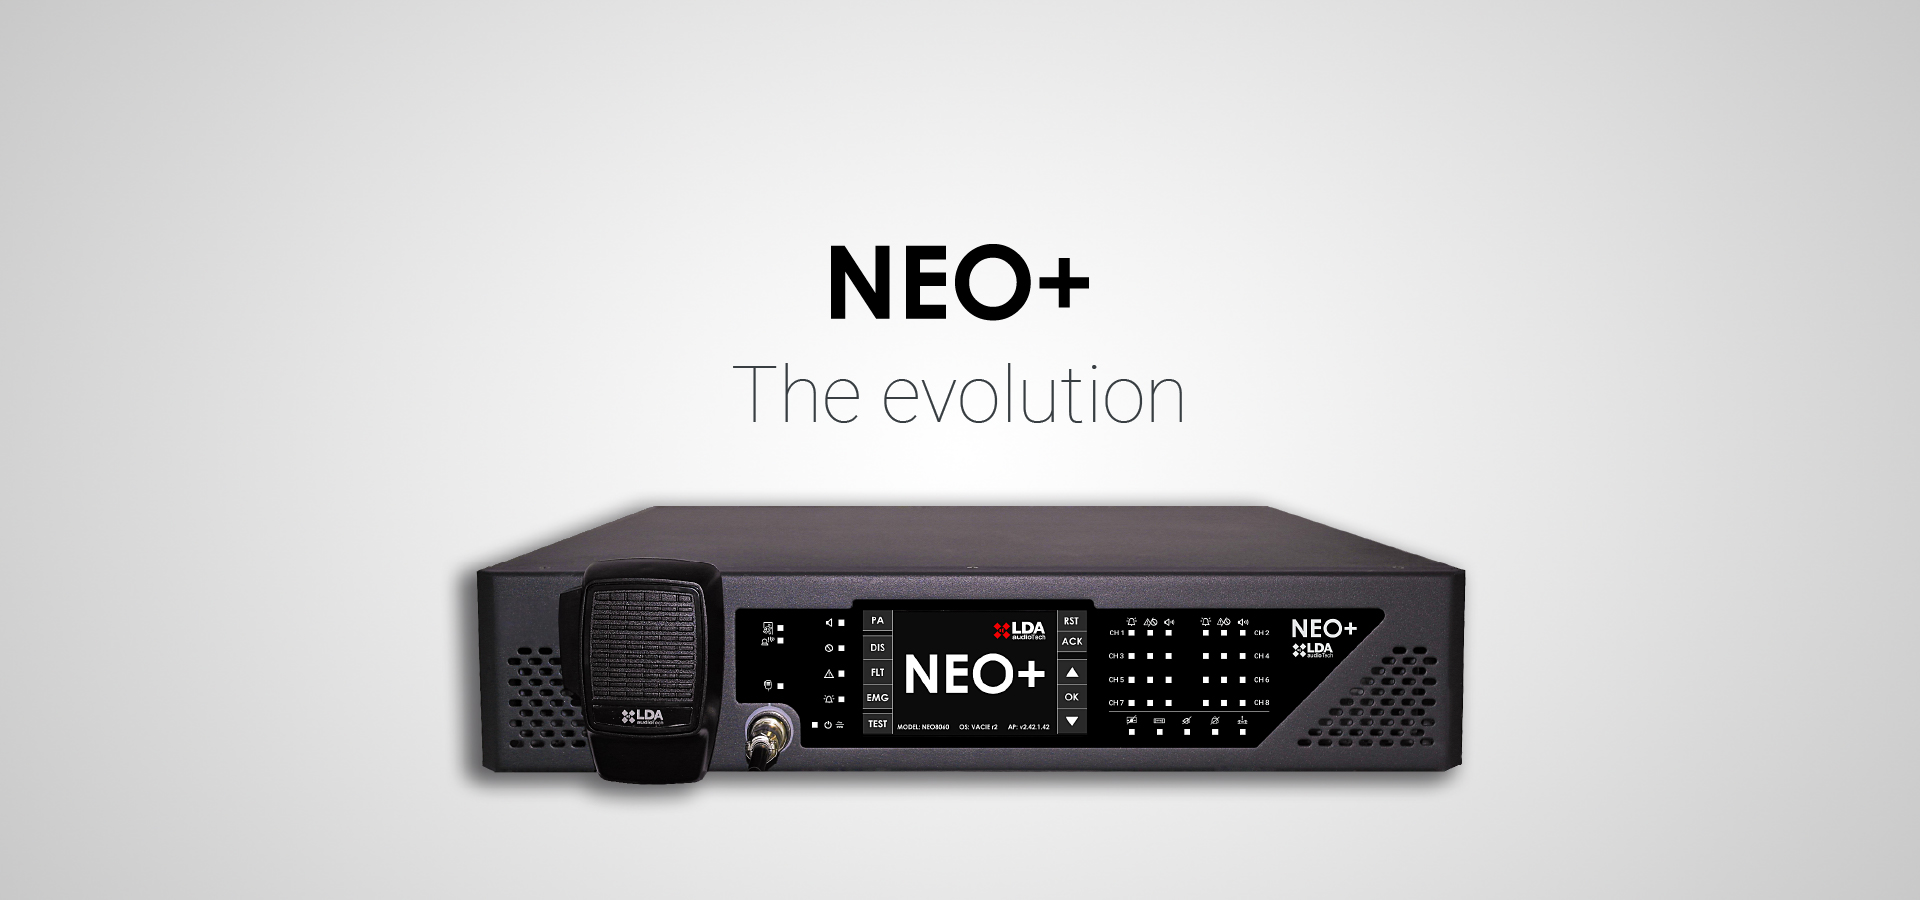 NEO+ The evolution